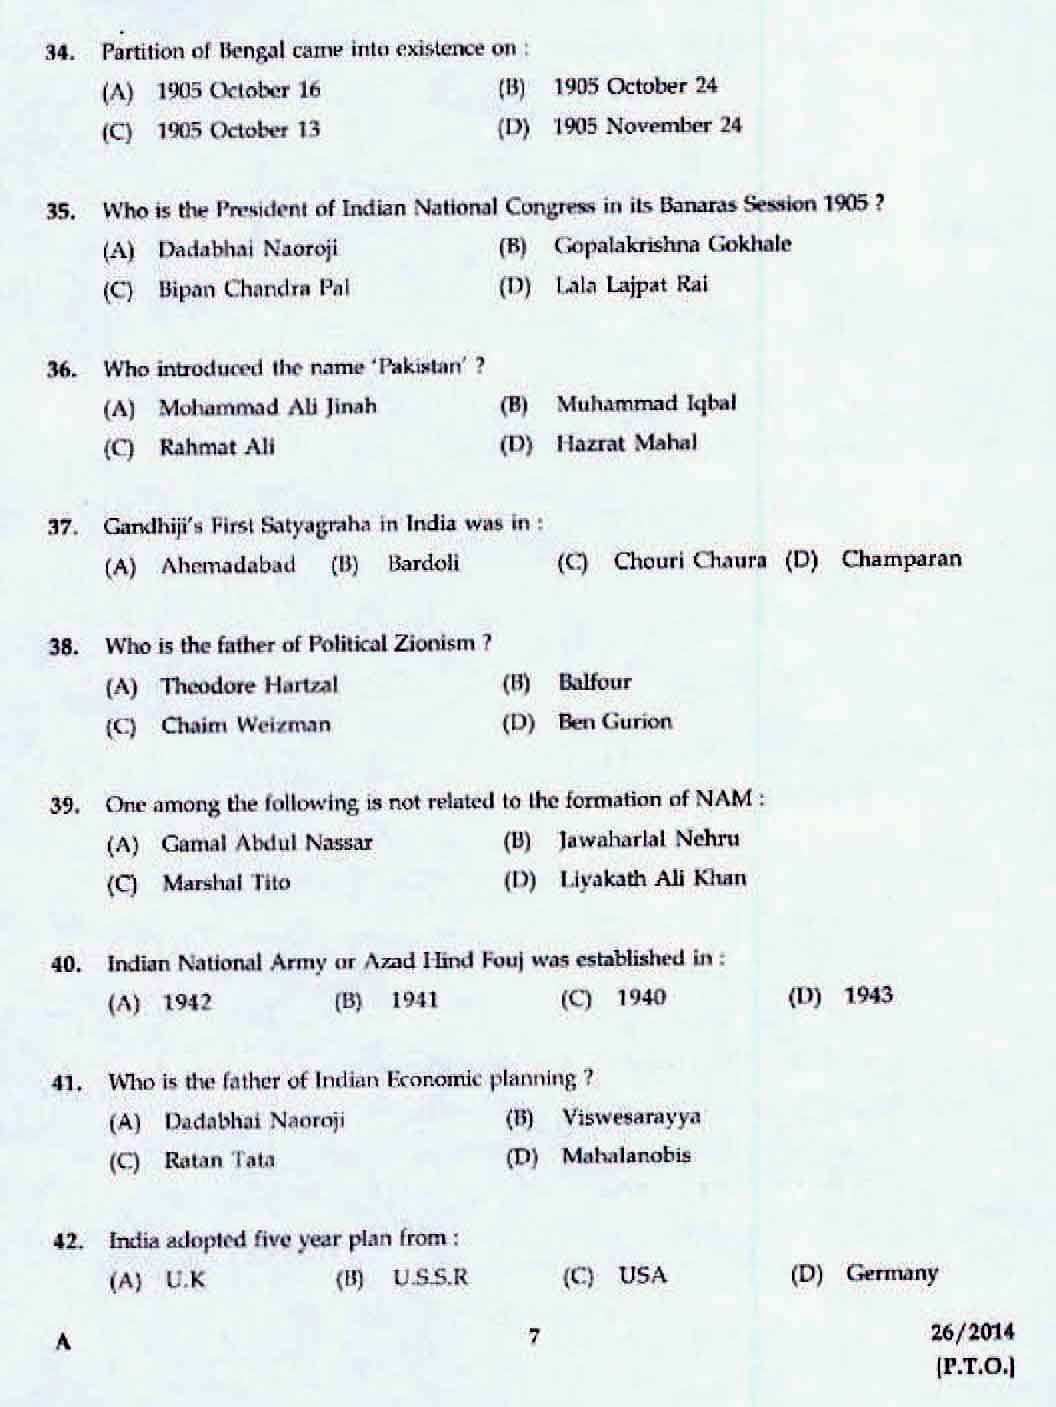 Kerala LD Typist Exam 2014 Question Paper Code 262014 5